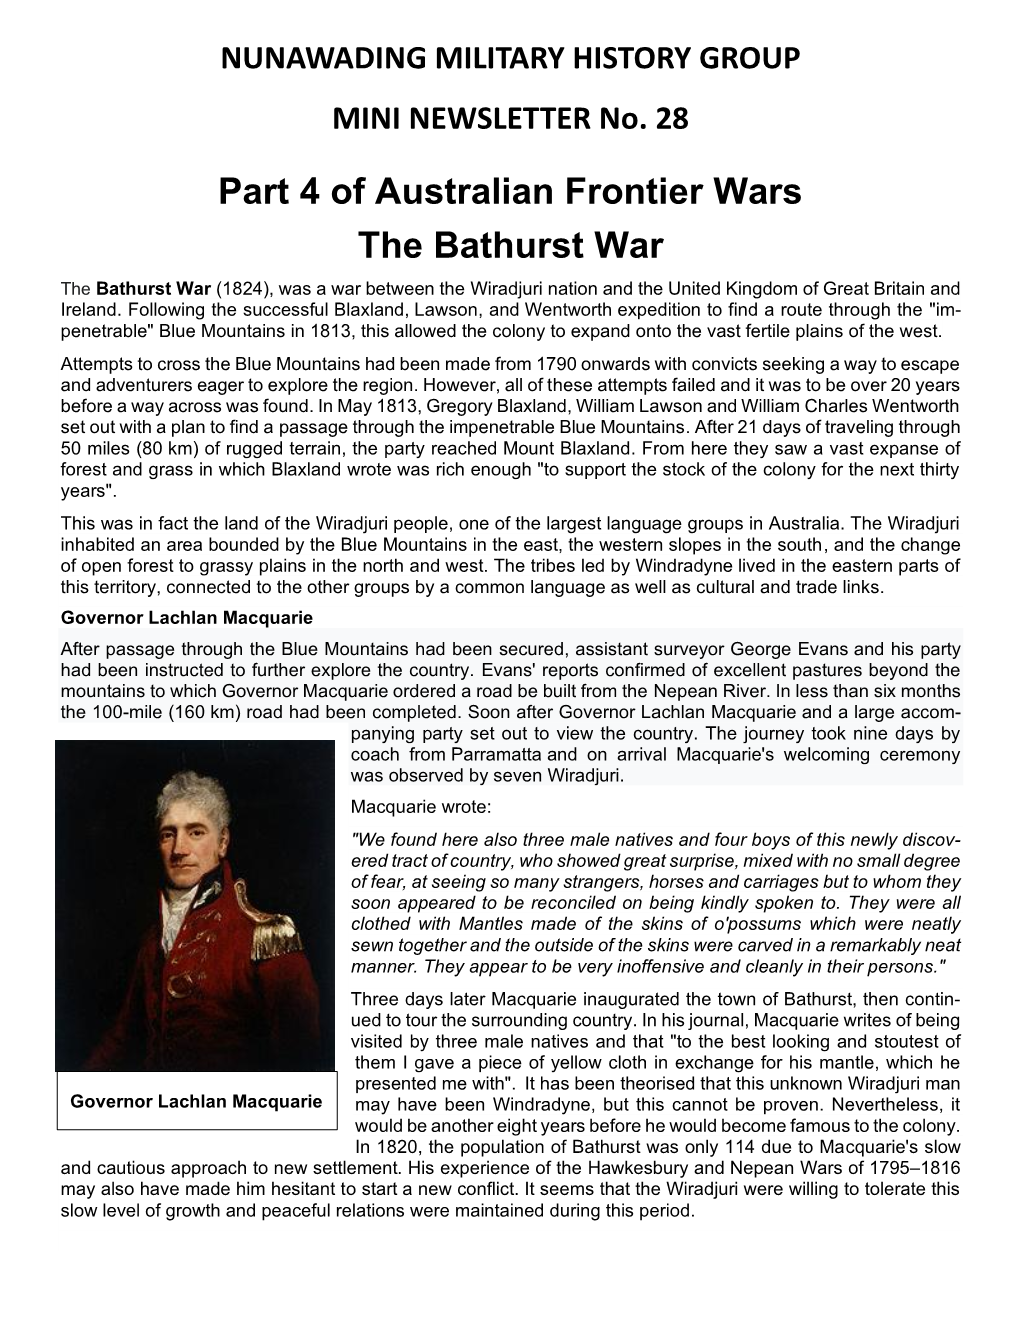 Part 4 of Australian Frontier Wars the Bathurst